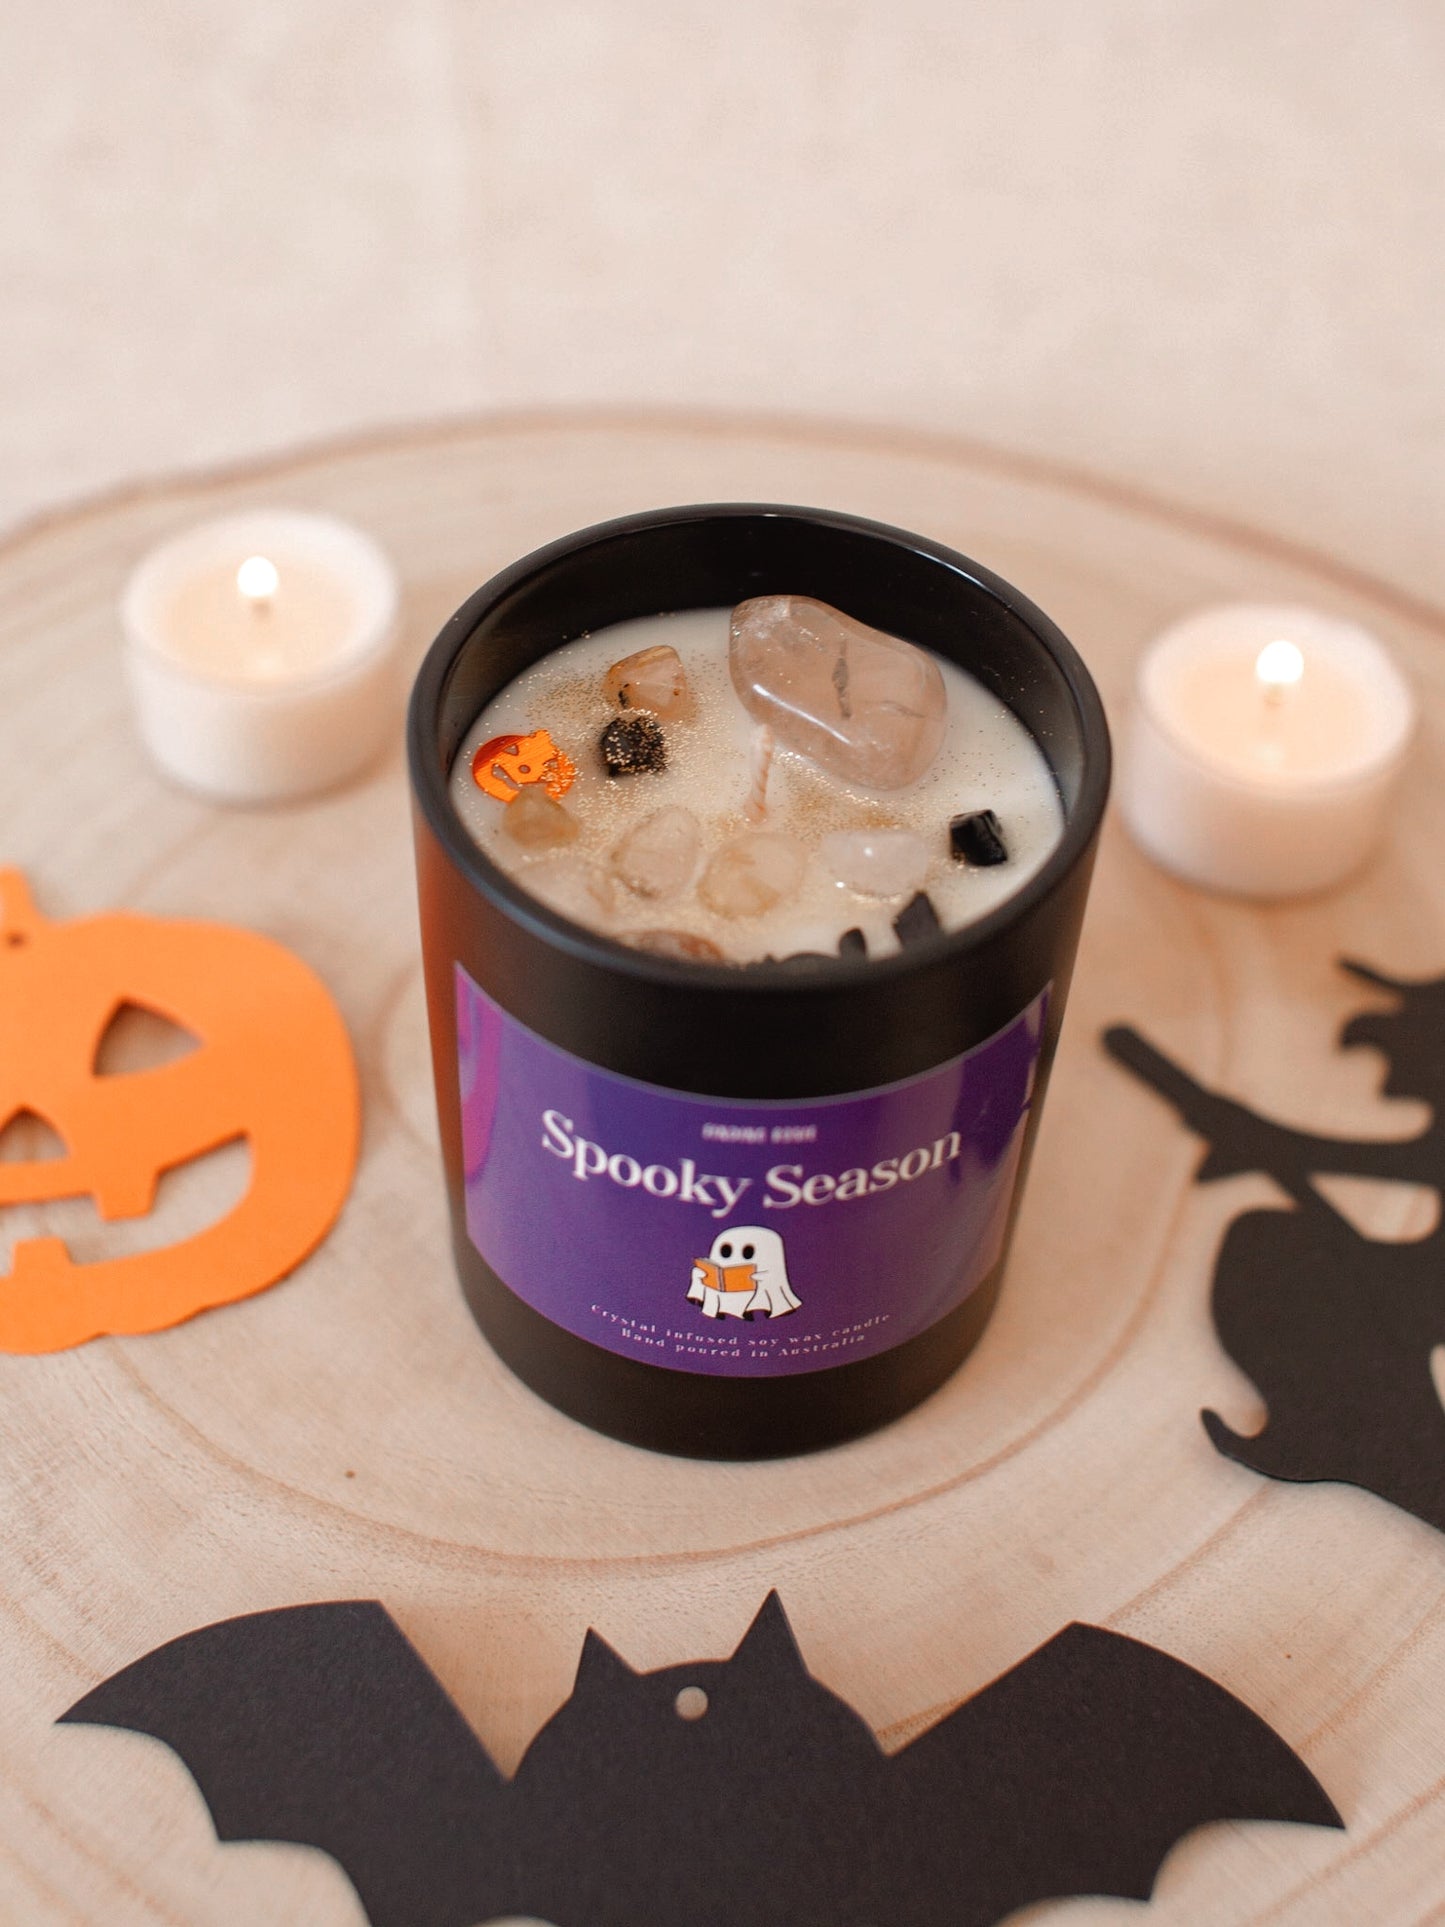 Spooky Season Crystal Candle